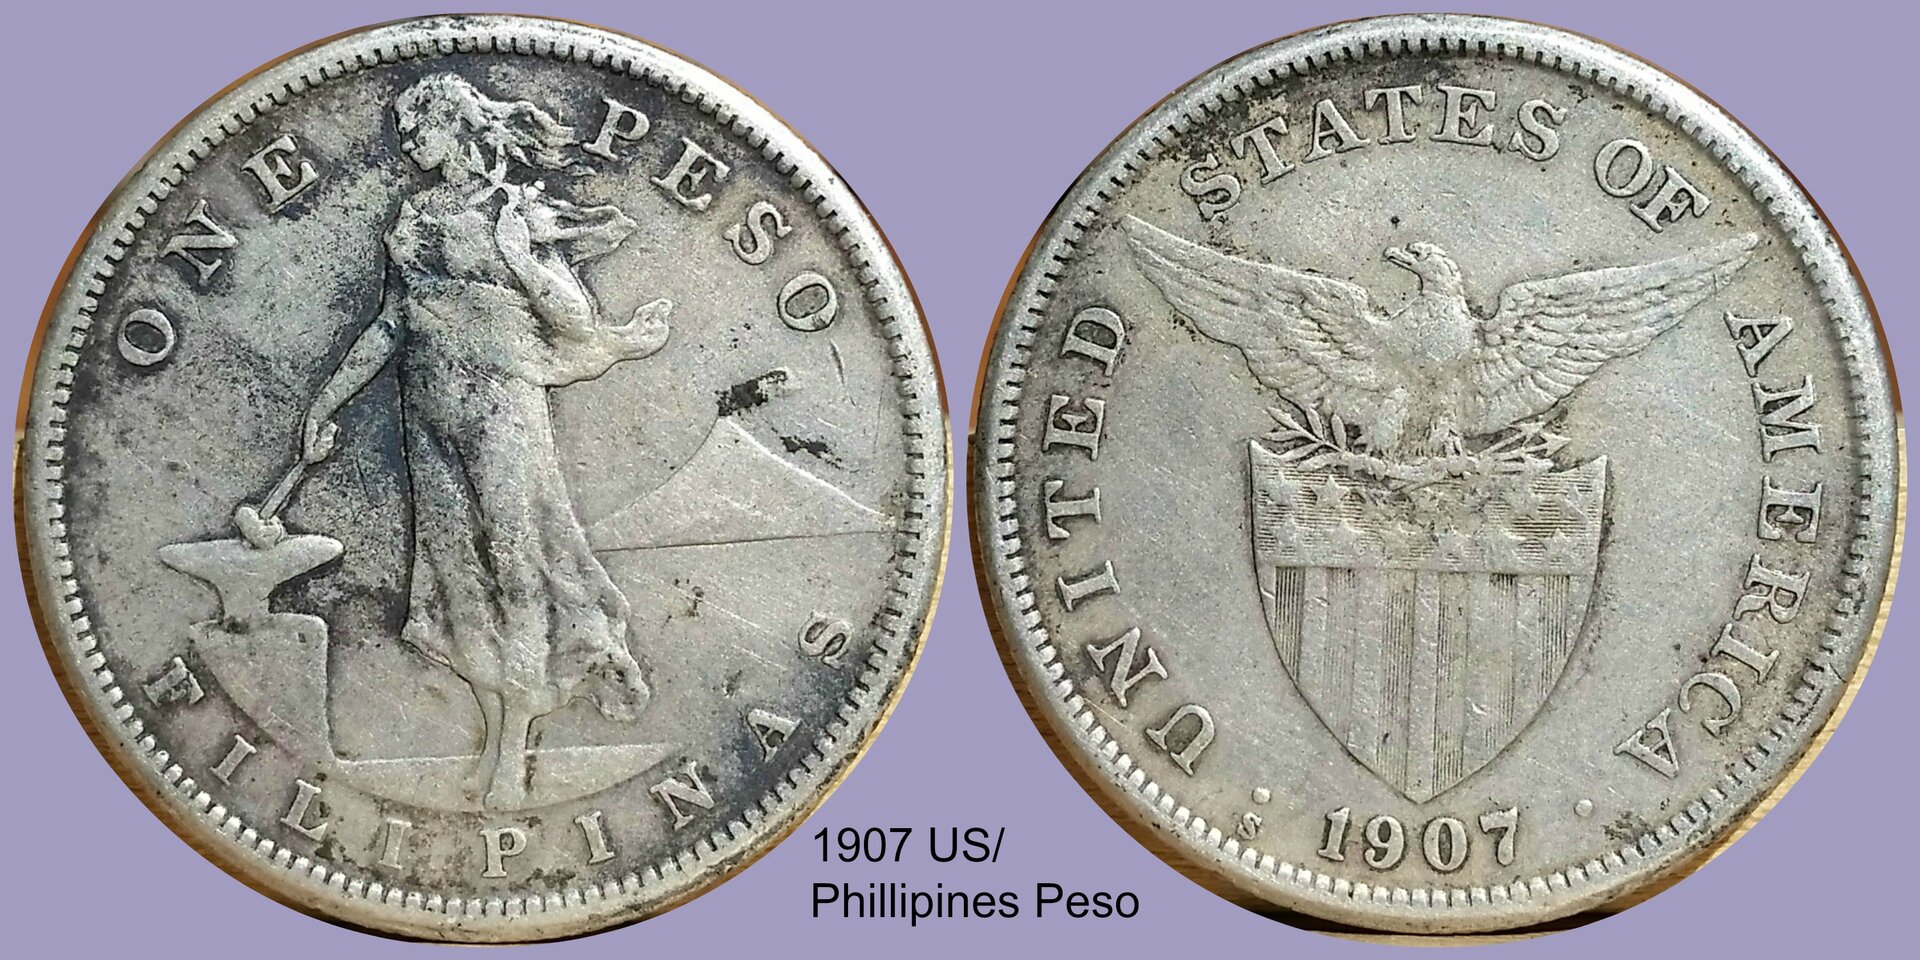 1907 US  Phillipines Peso.jpg